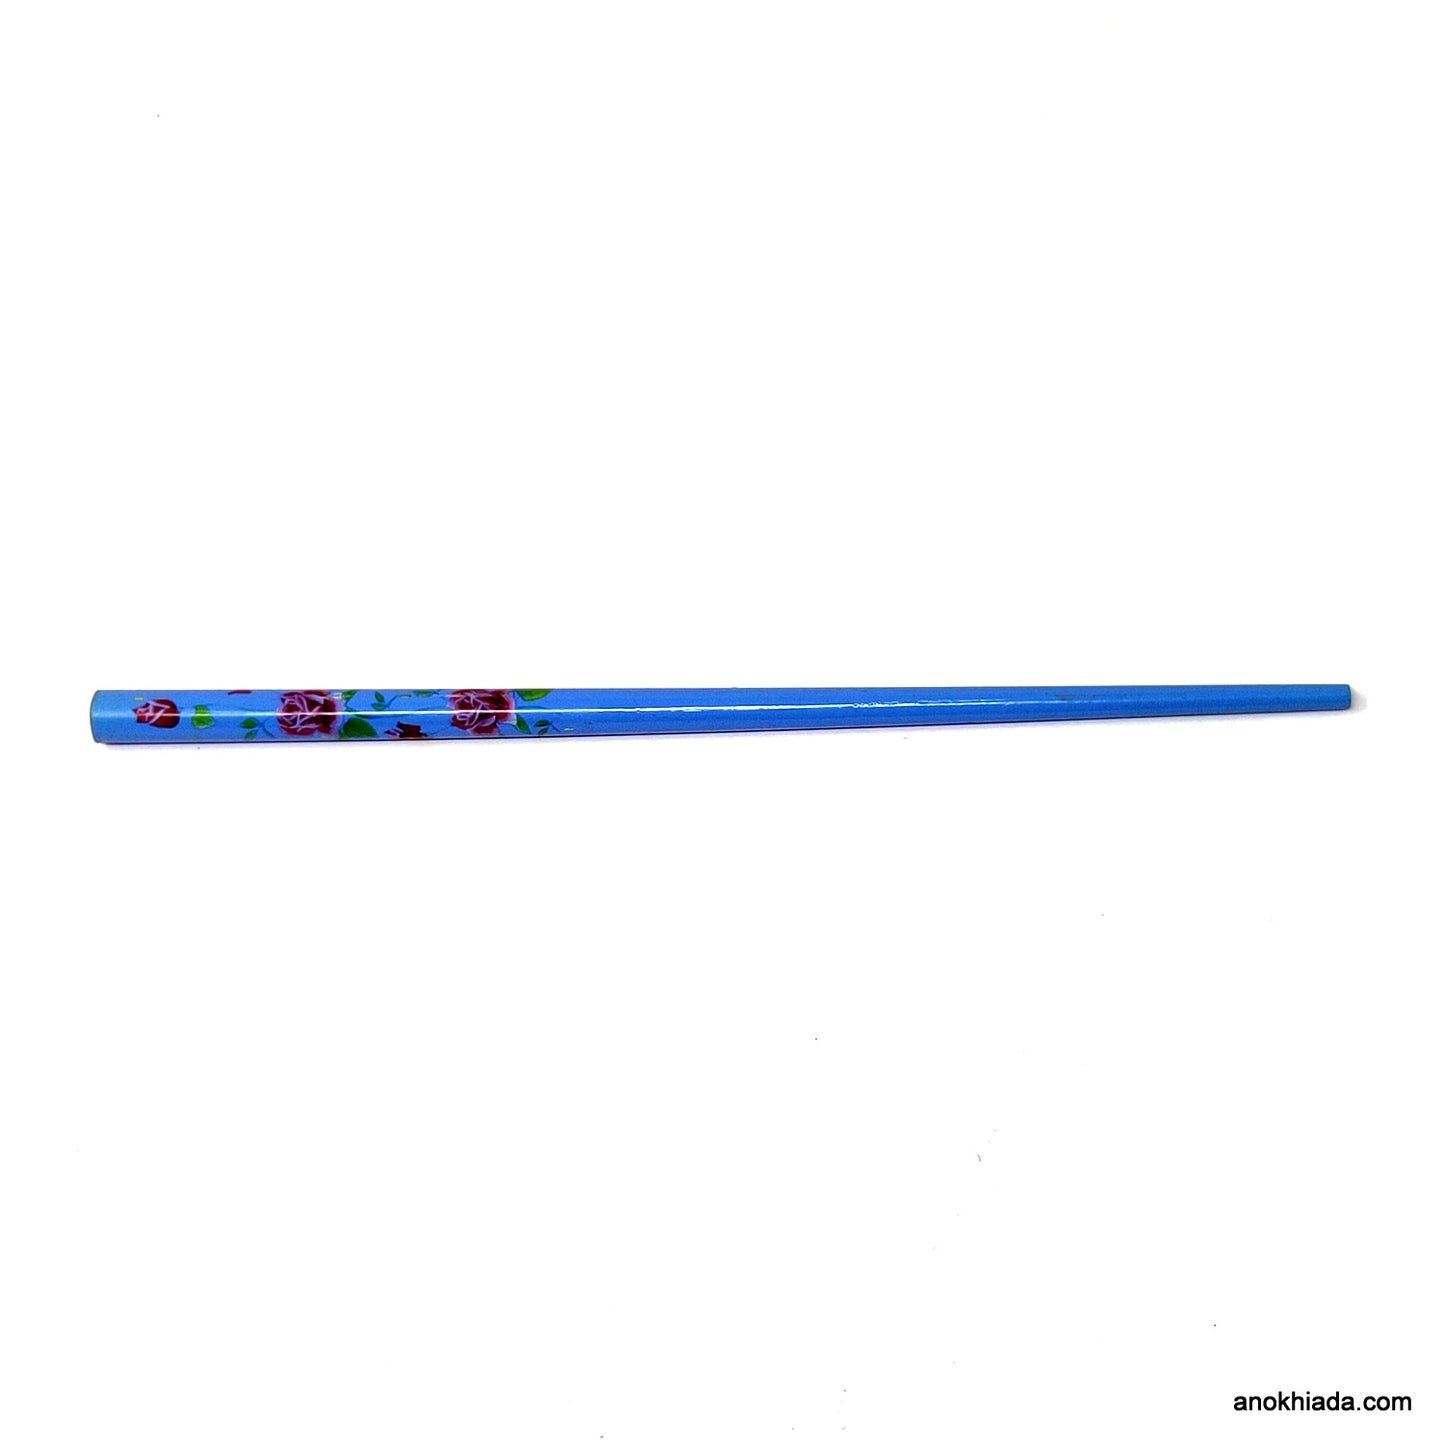 Anokhi Ada Flower Print Blue Wooden Juda Stick/Bun Stick - (99-18B Juda Stick)